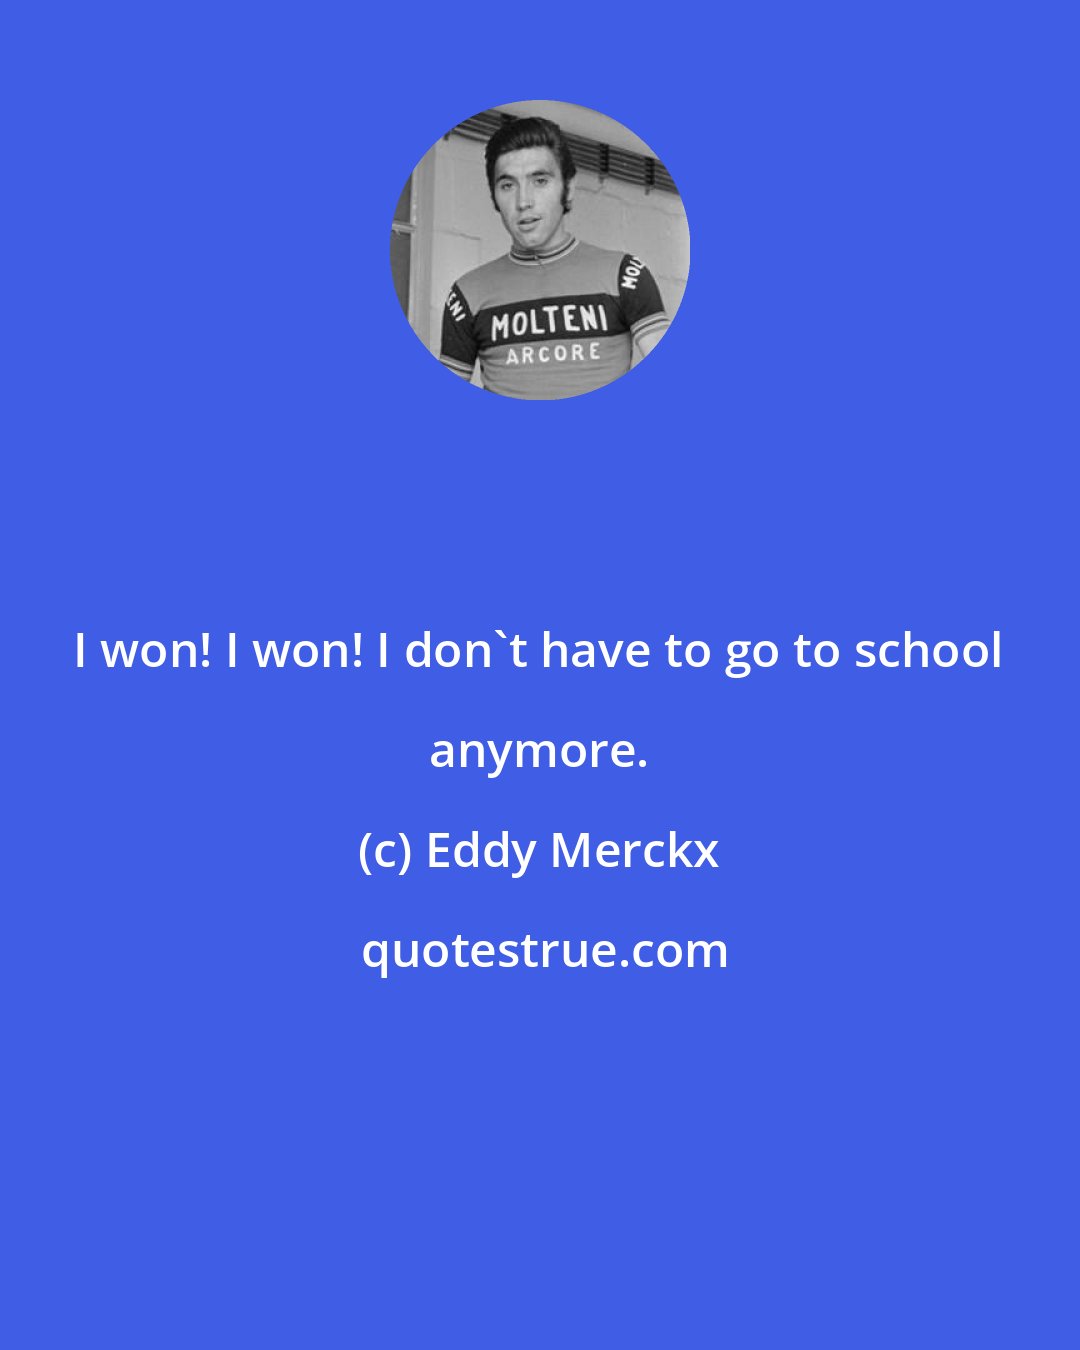 Eddy Merckx: I won! I won! I don't have to go to school anymore.